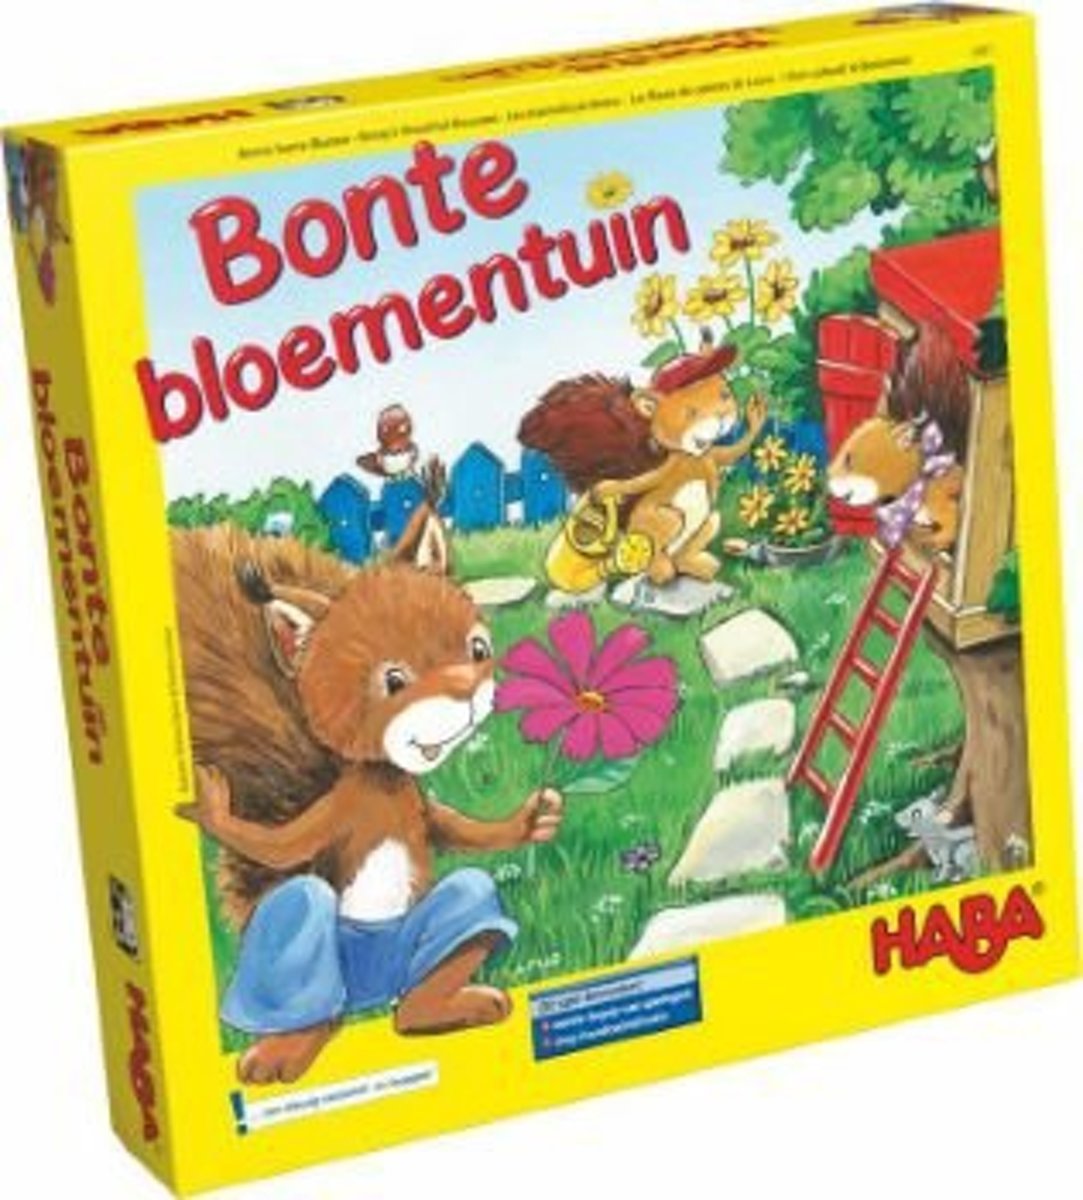 Spel - Bonte bloementuin (Nederlands) = Duits 4987 - Frans 5950